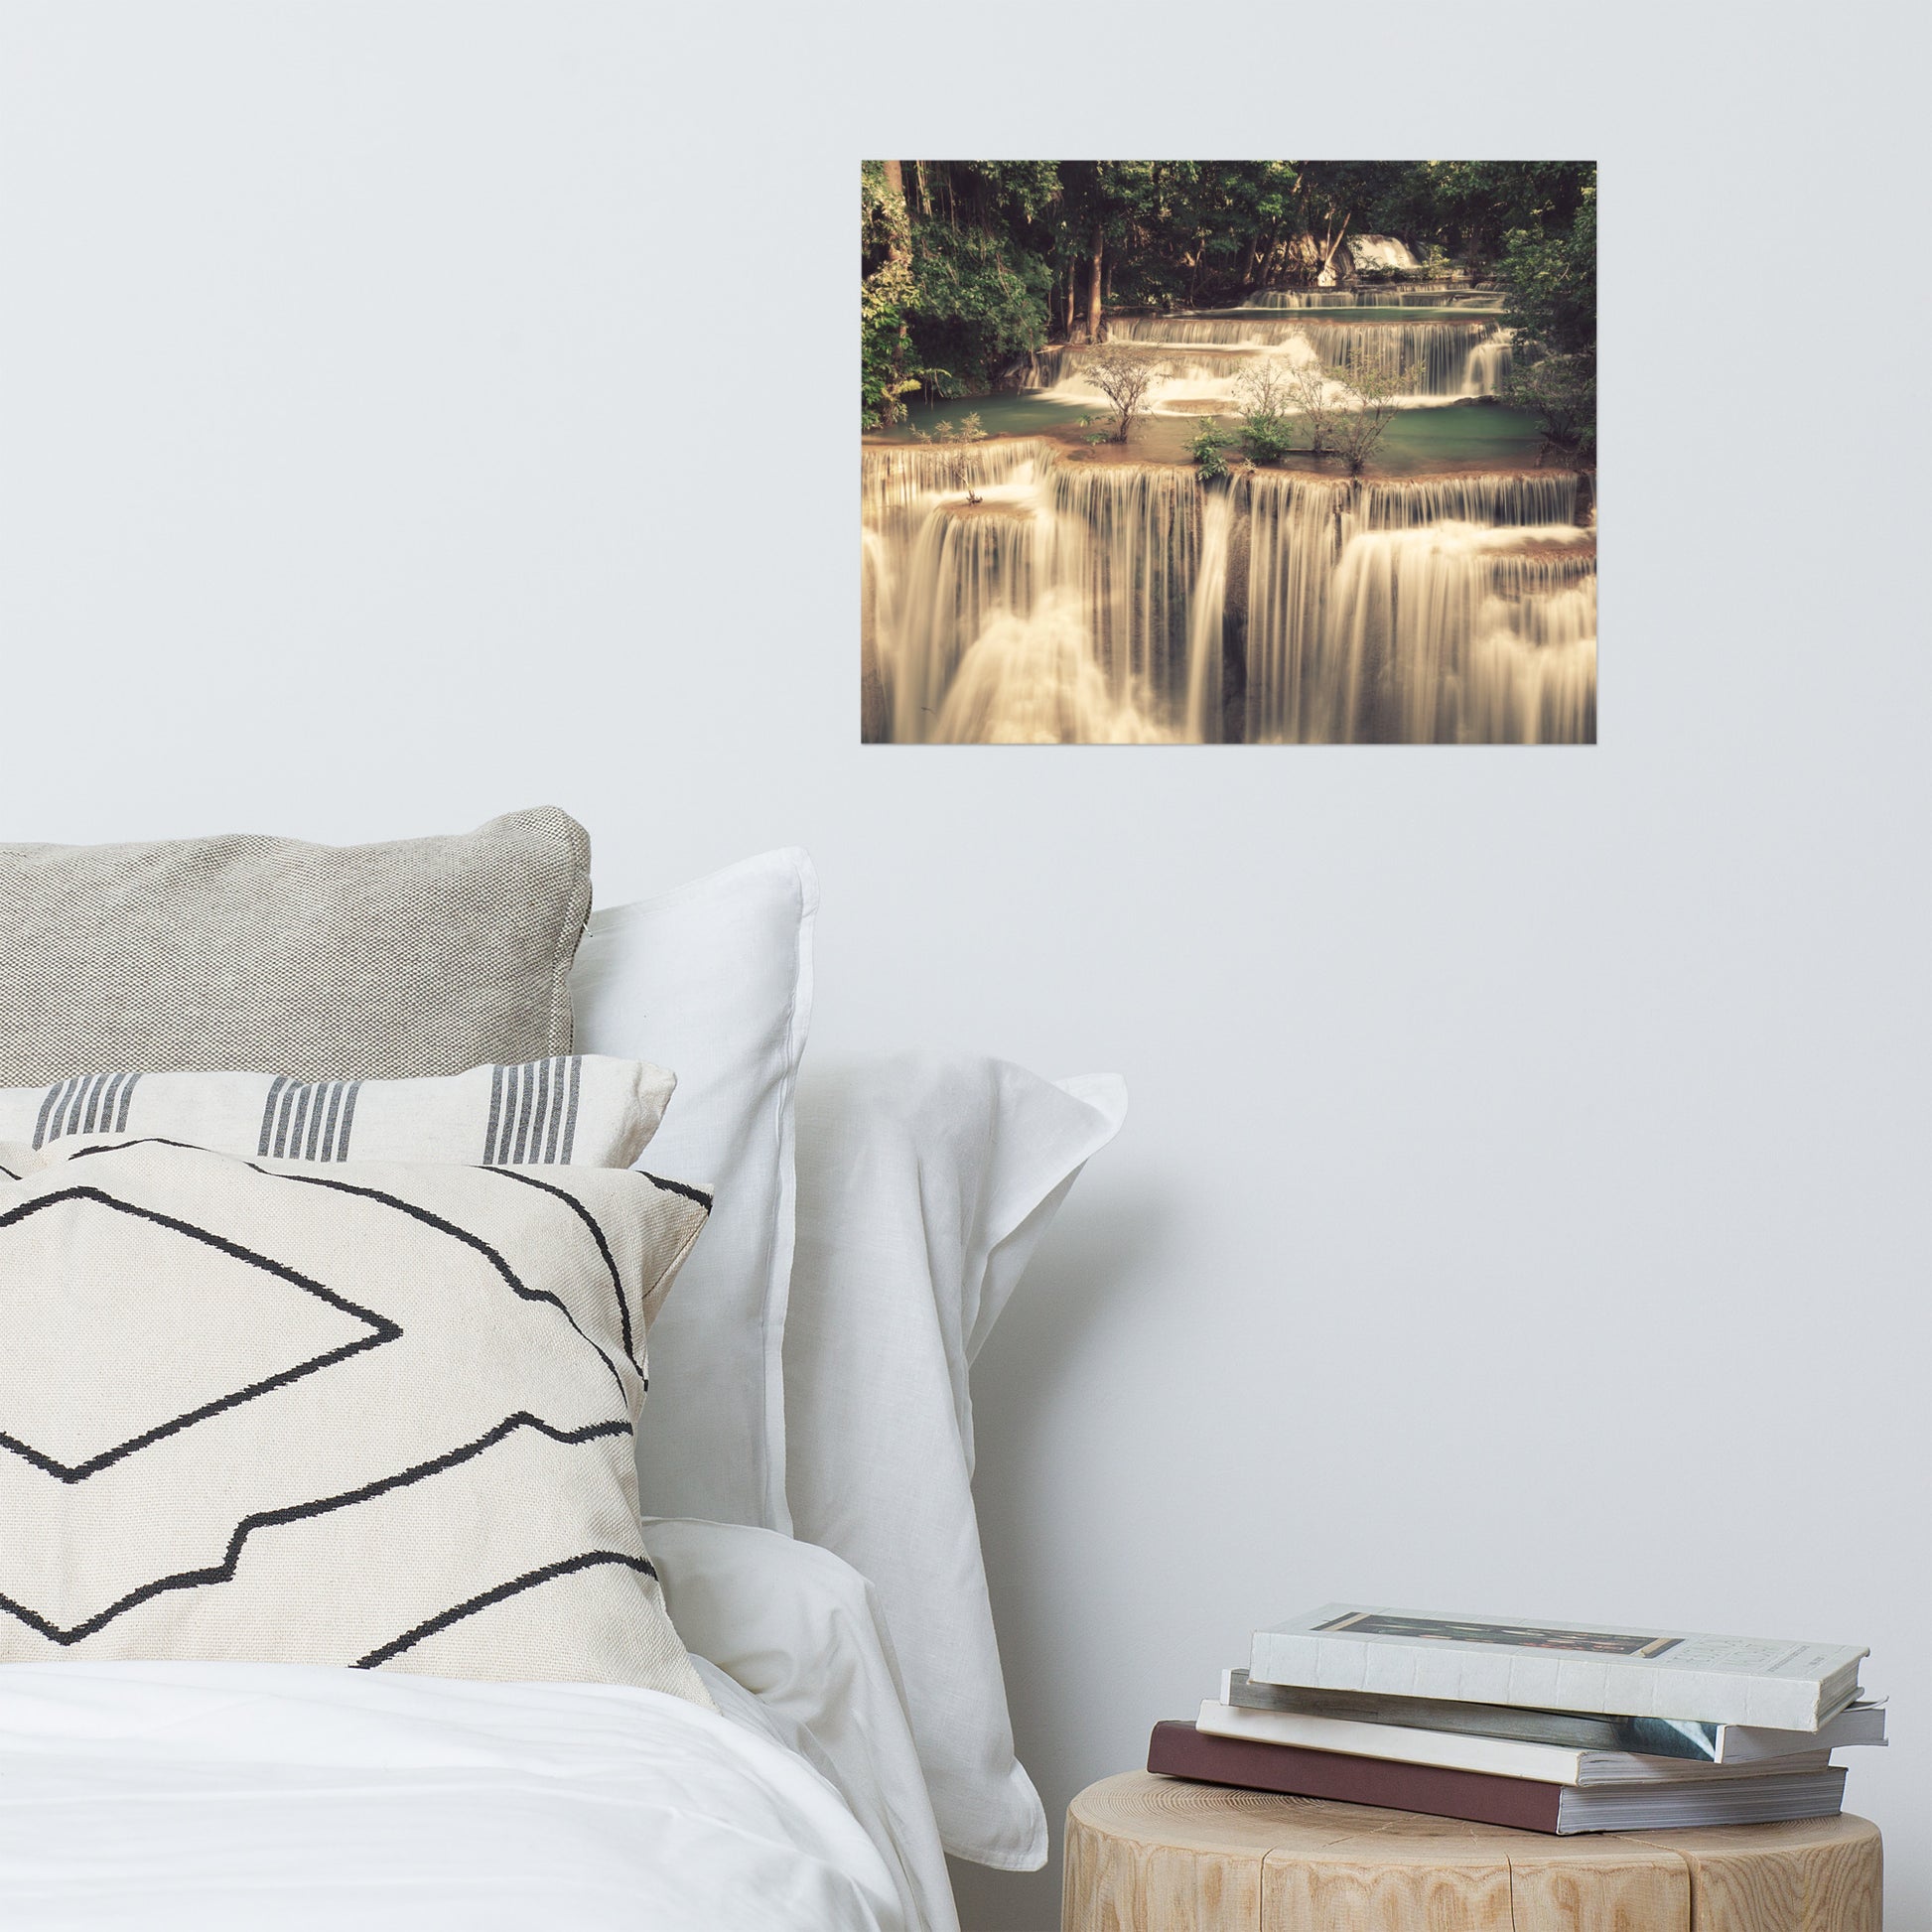 Misty Huay Mae Khamin Waterfall Thailand Landscape Photo Loose Wall Art Prints